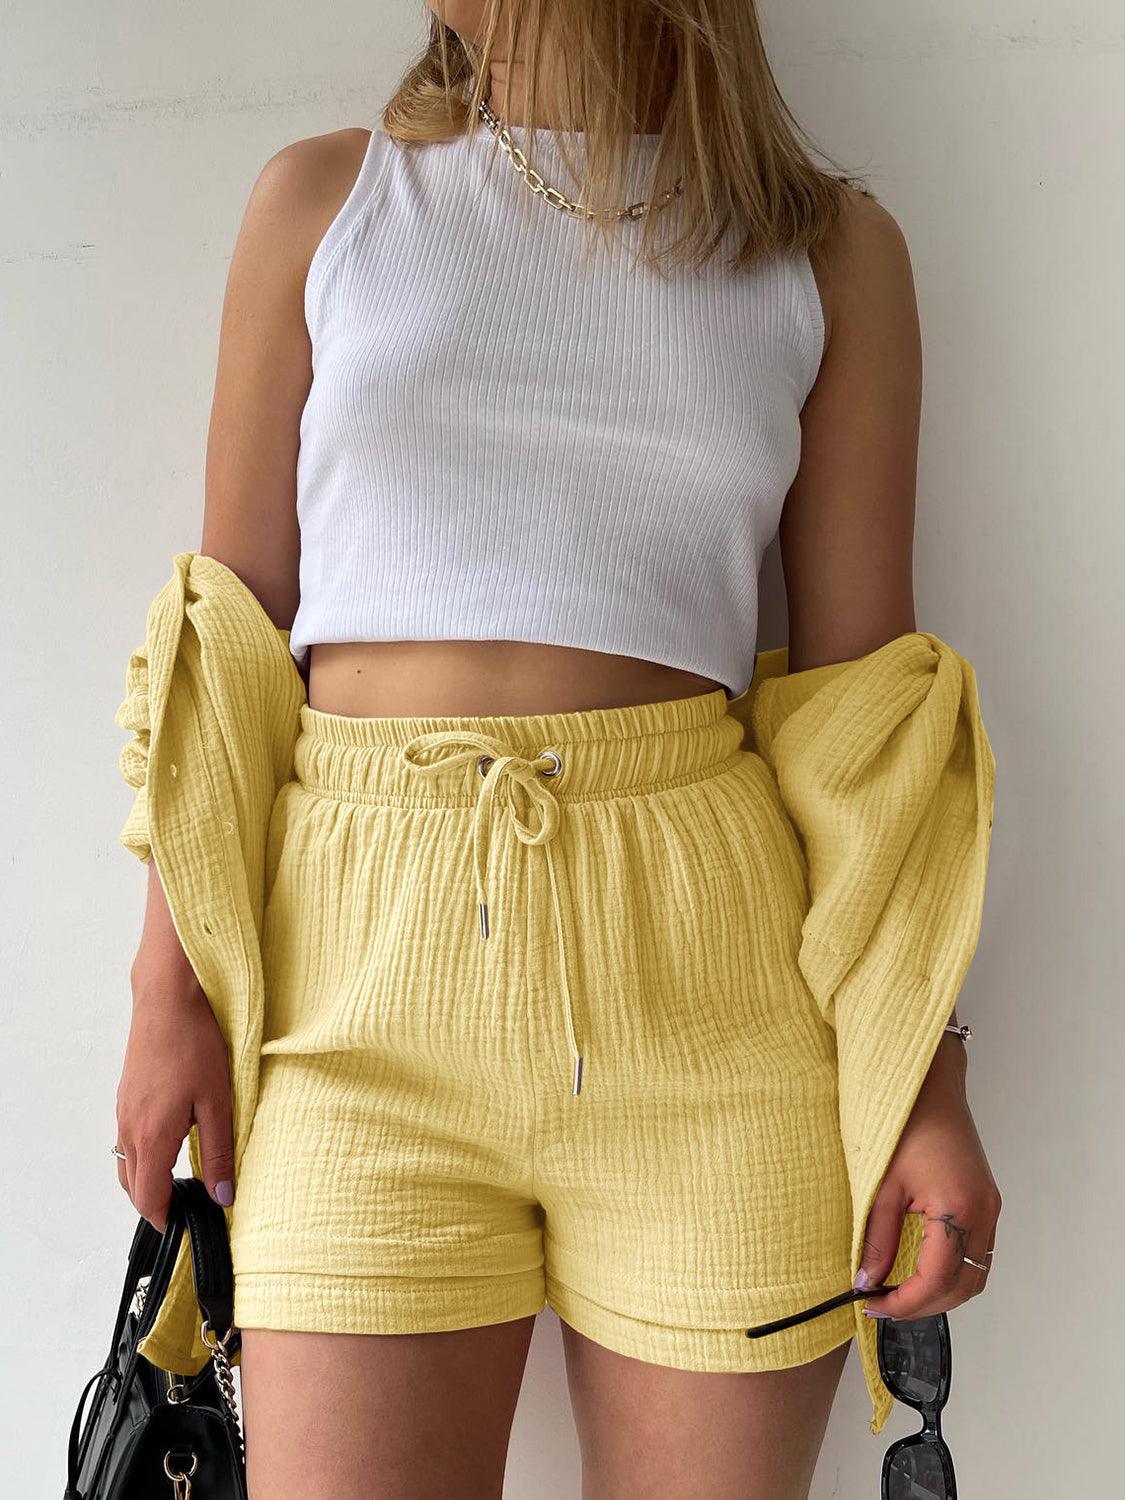 Bona Fide Fashion - Texture Button Up Shirt and Drawstring Bottom Set - Women Fashion - Bona Fide Fashion